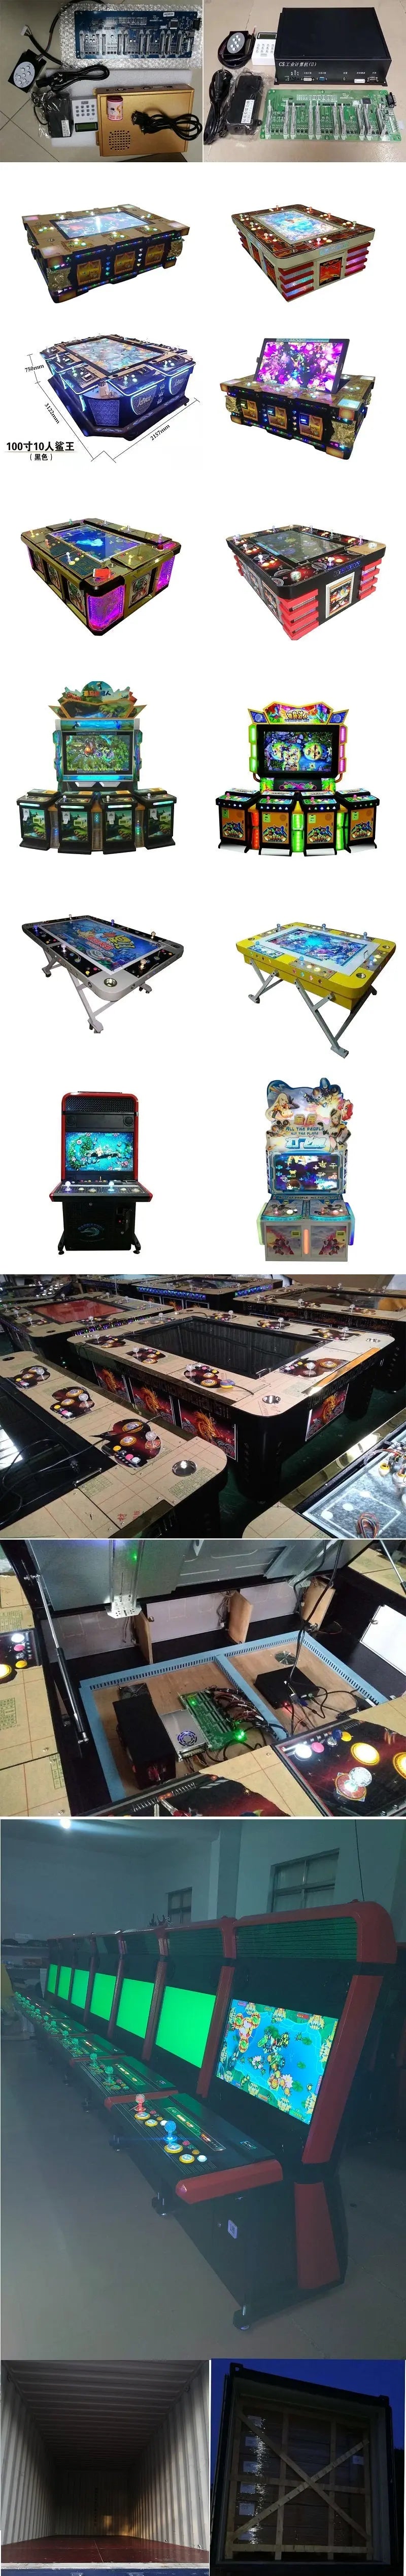 Ocean-king-3-Plus-Turtles-Rage-Kit-IGS-Fish-Game-kits-for-Sale-Tomy-Arcade